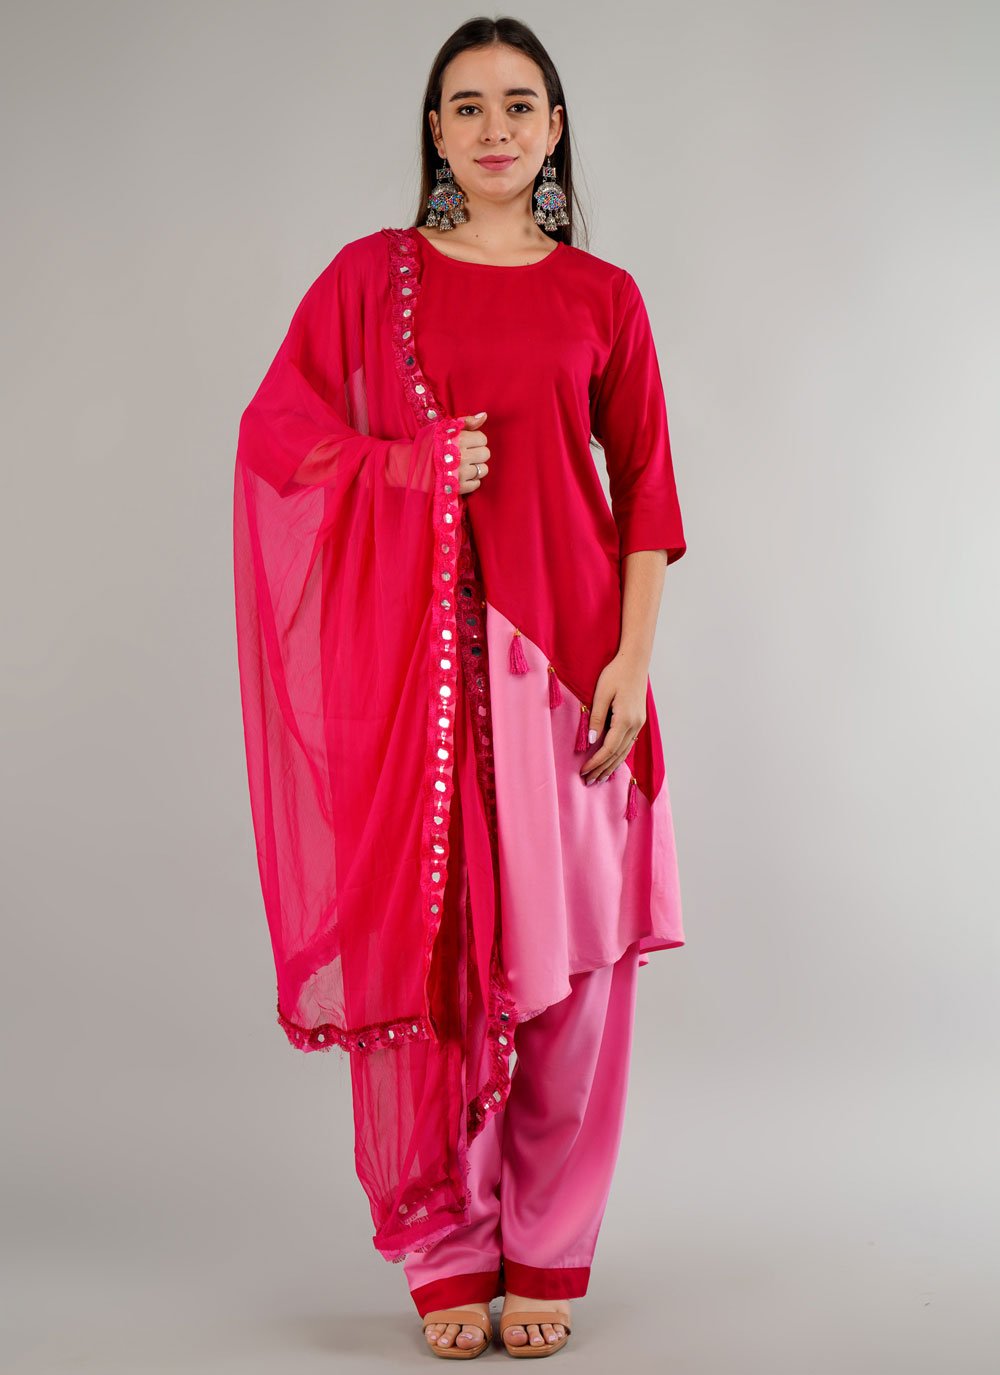 Buy Amazon Brand - Myx Women's Rayon Salwar Suit-Set at Amazon.in